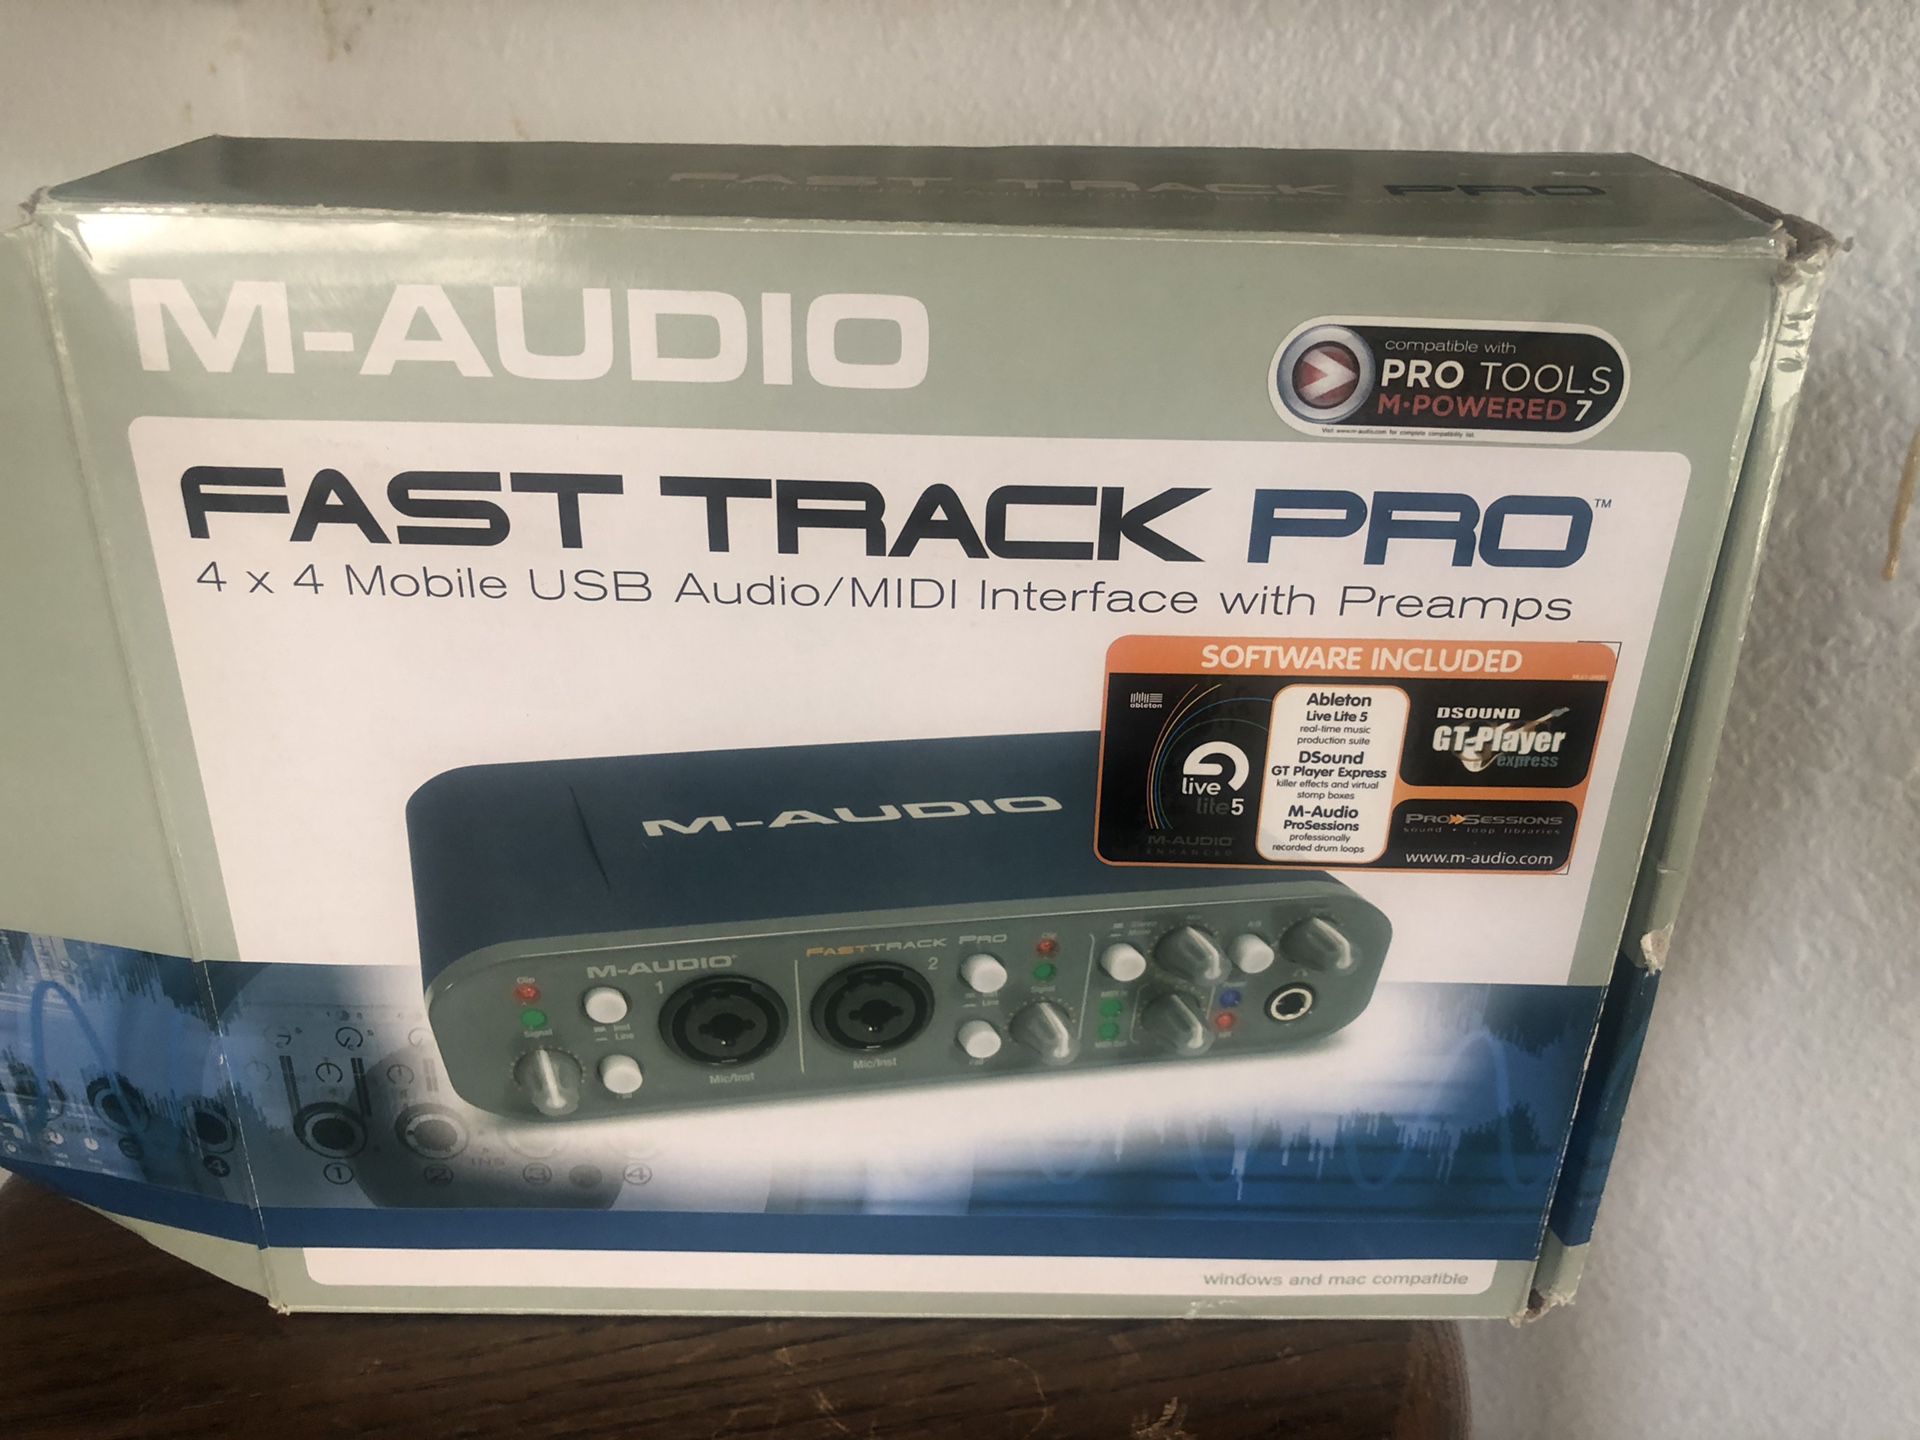 Fast track pro USB audio